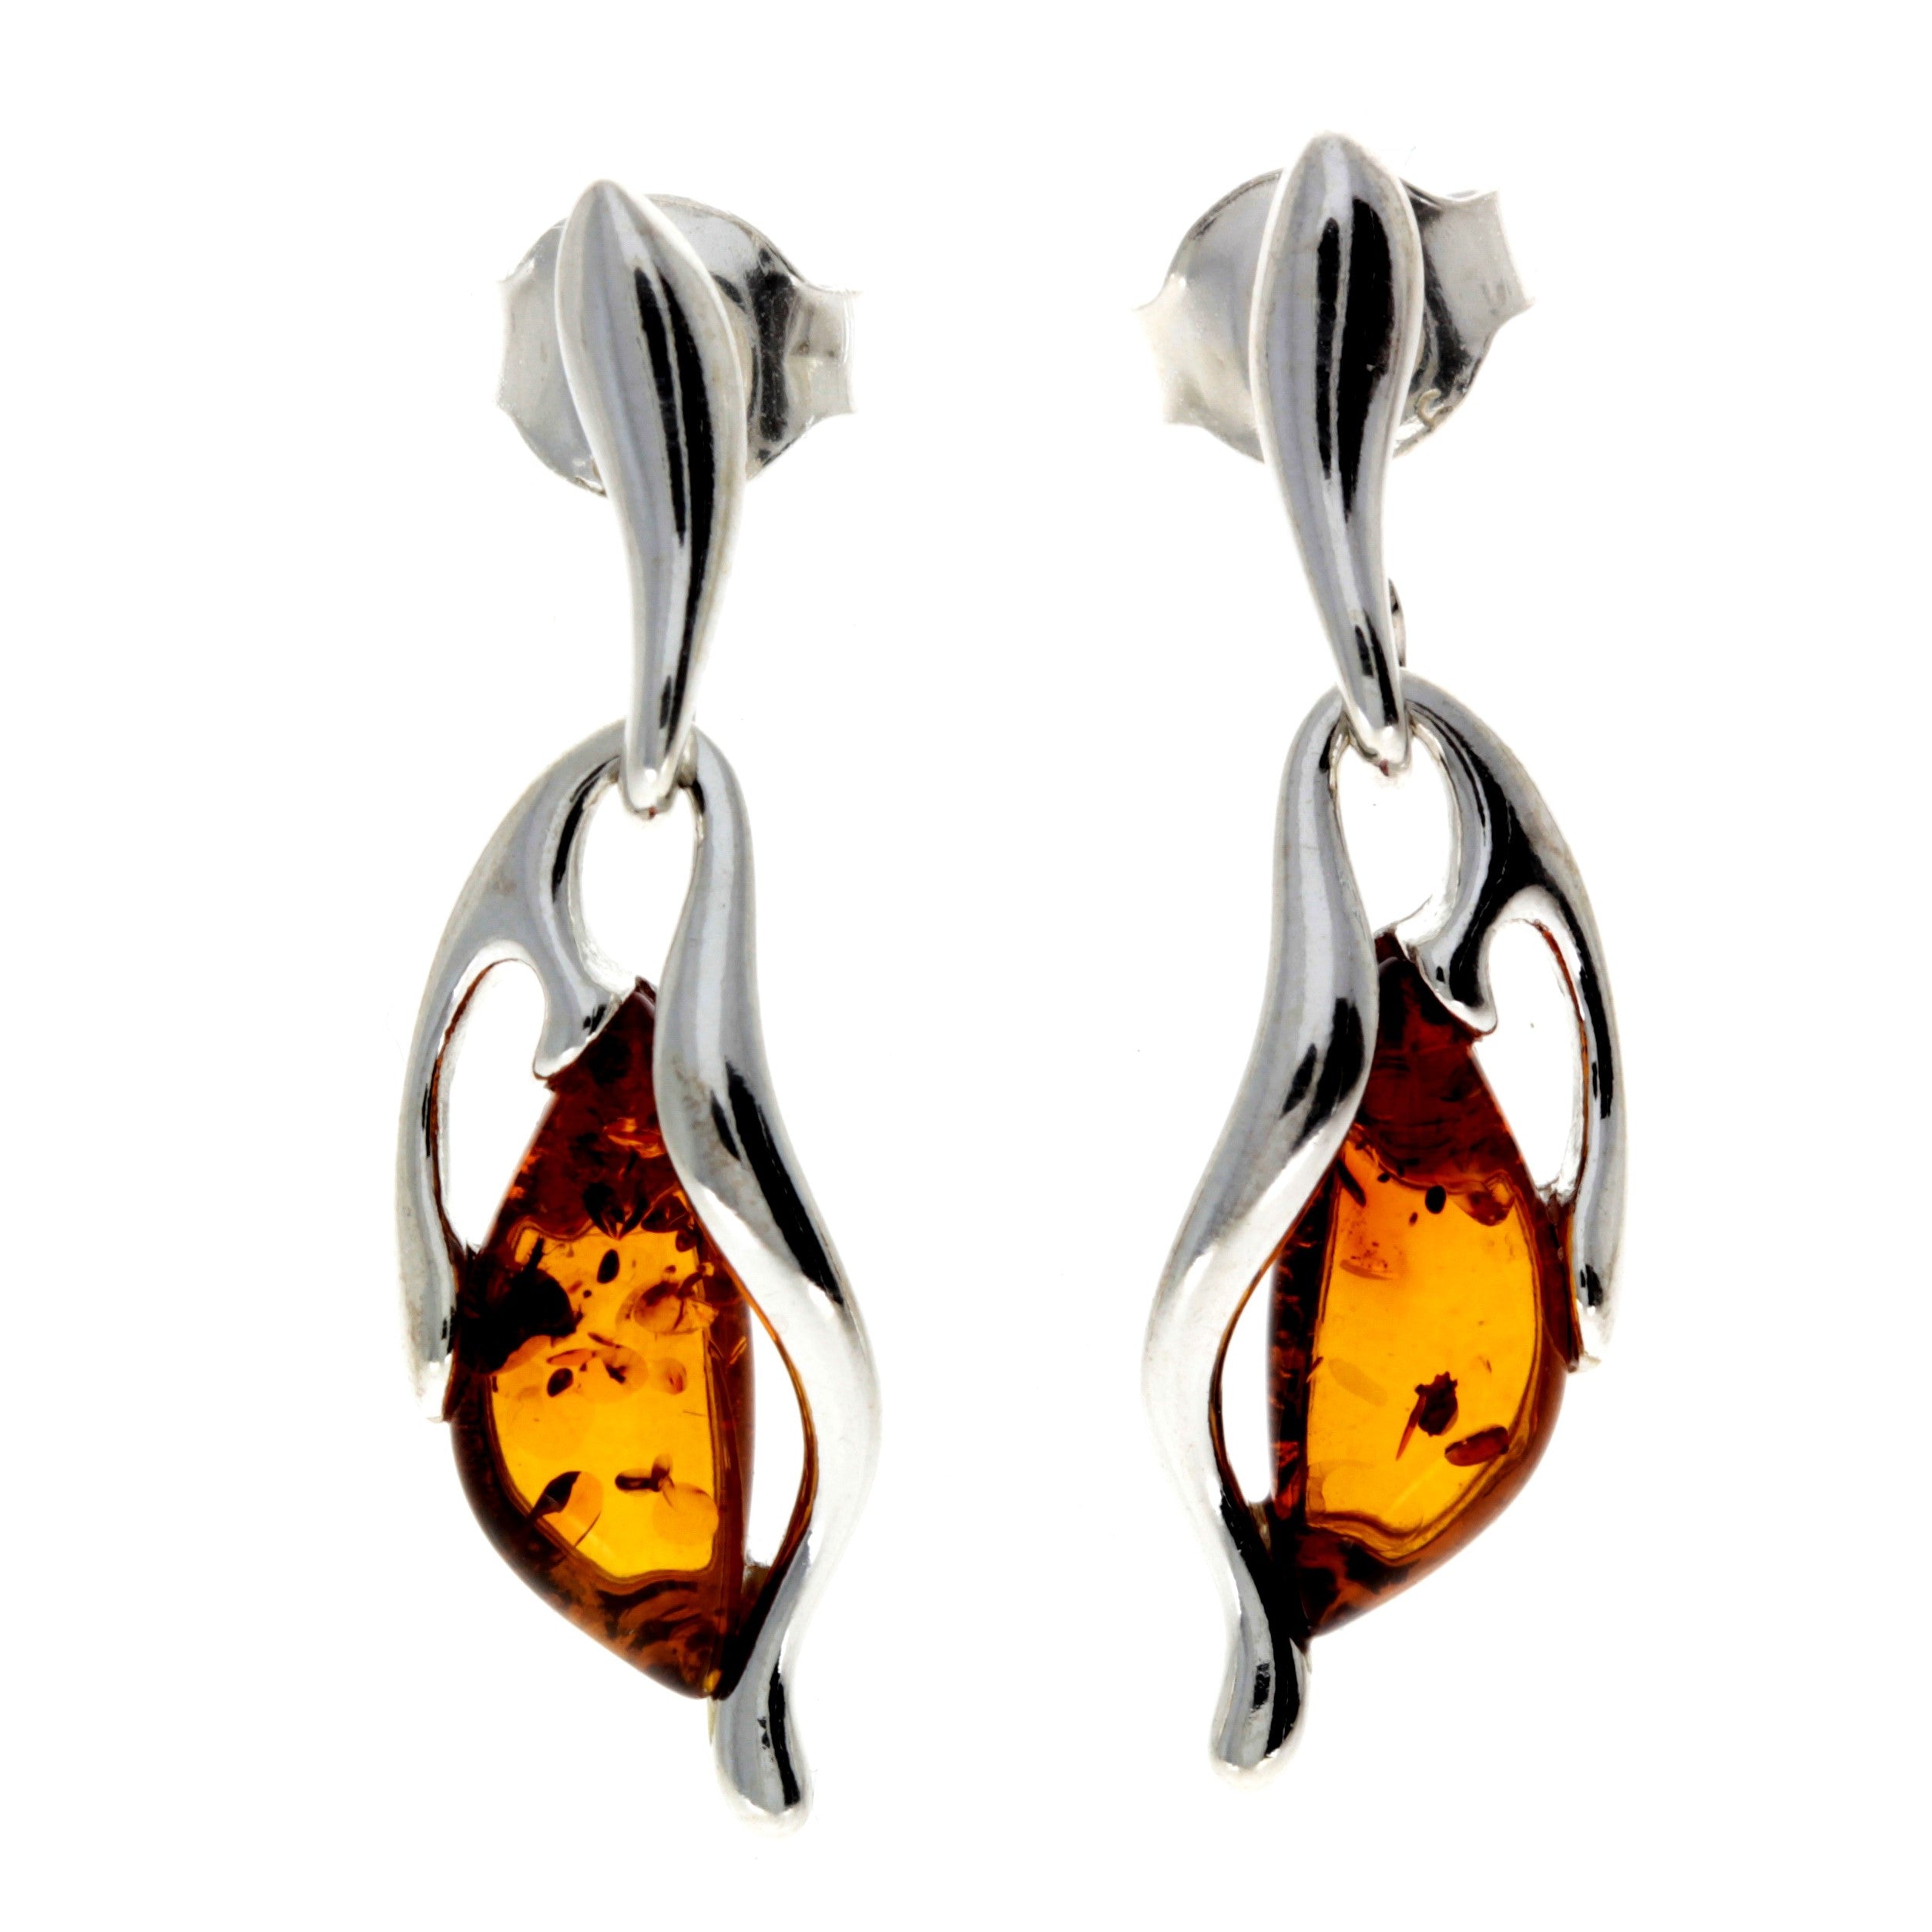 925 Sterling Silver & Genuine Baltic Amber Drop Studs Modern Earrings - GL1006